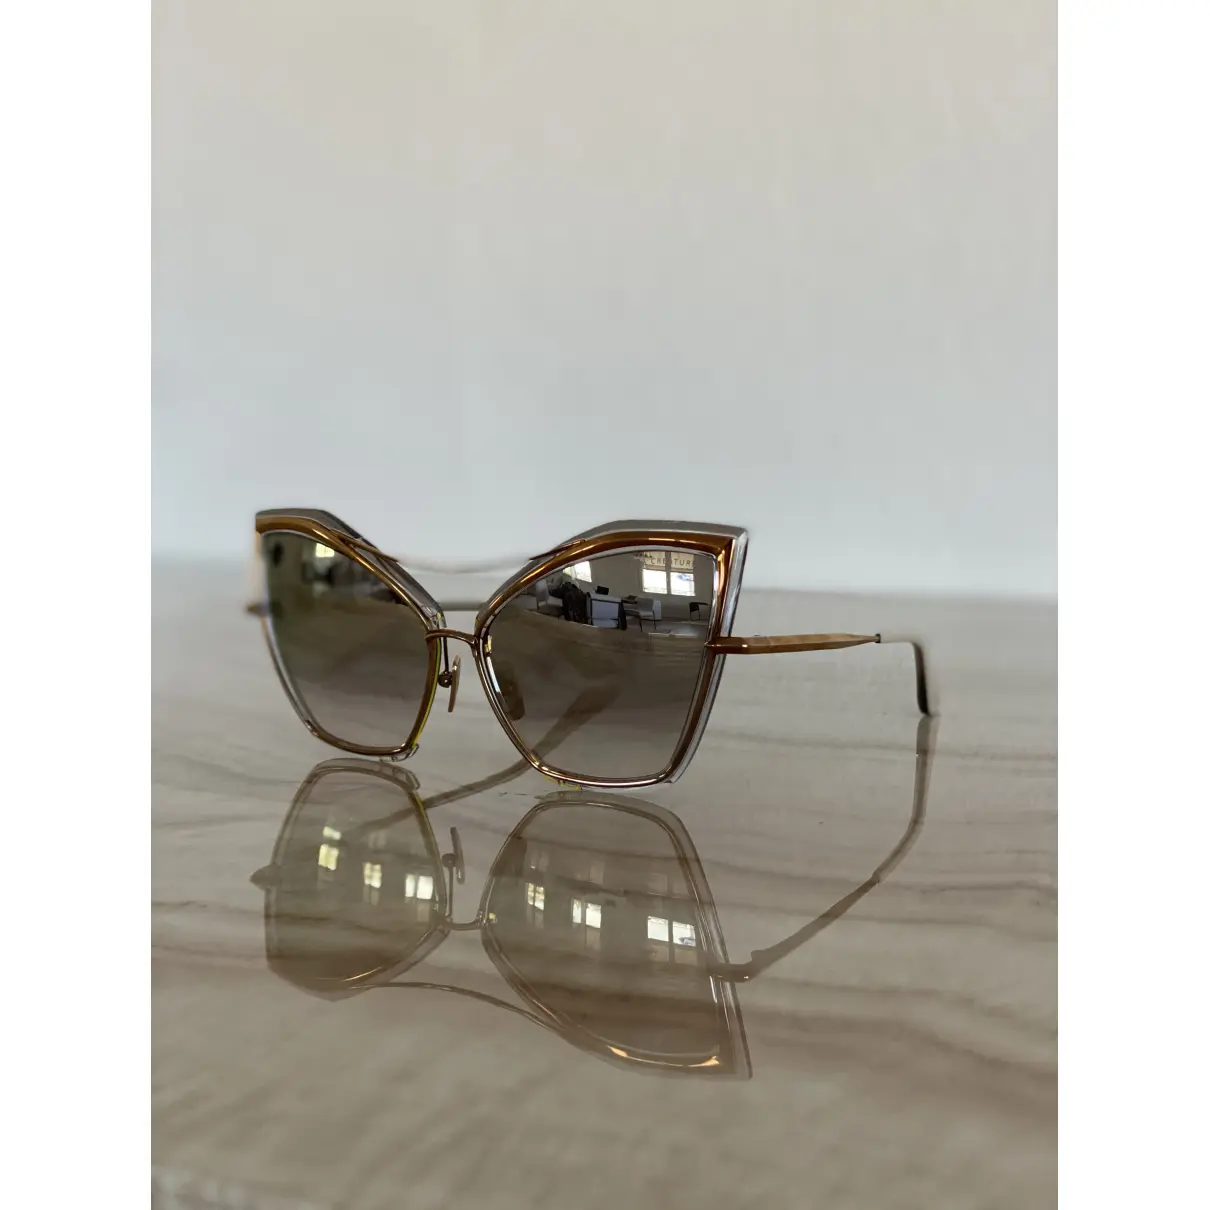 Buy Dita Oversized sunglasses online